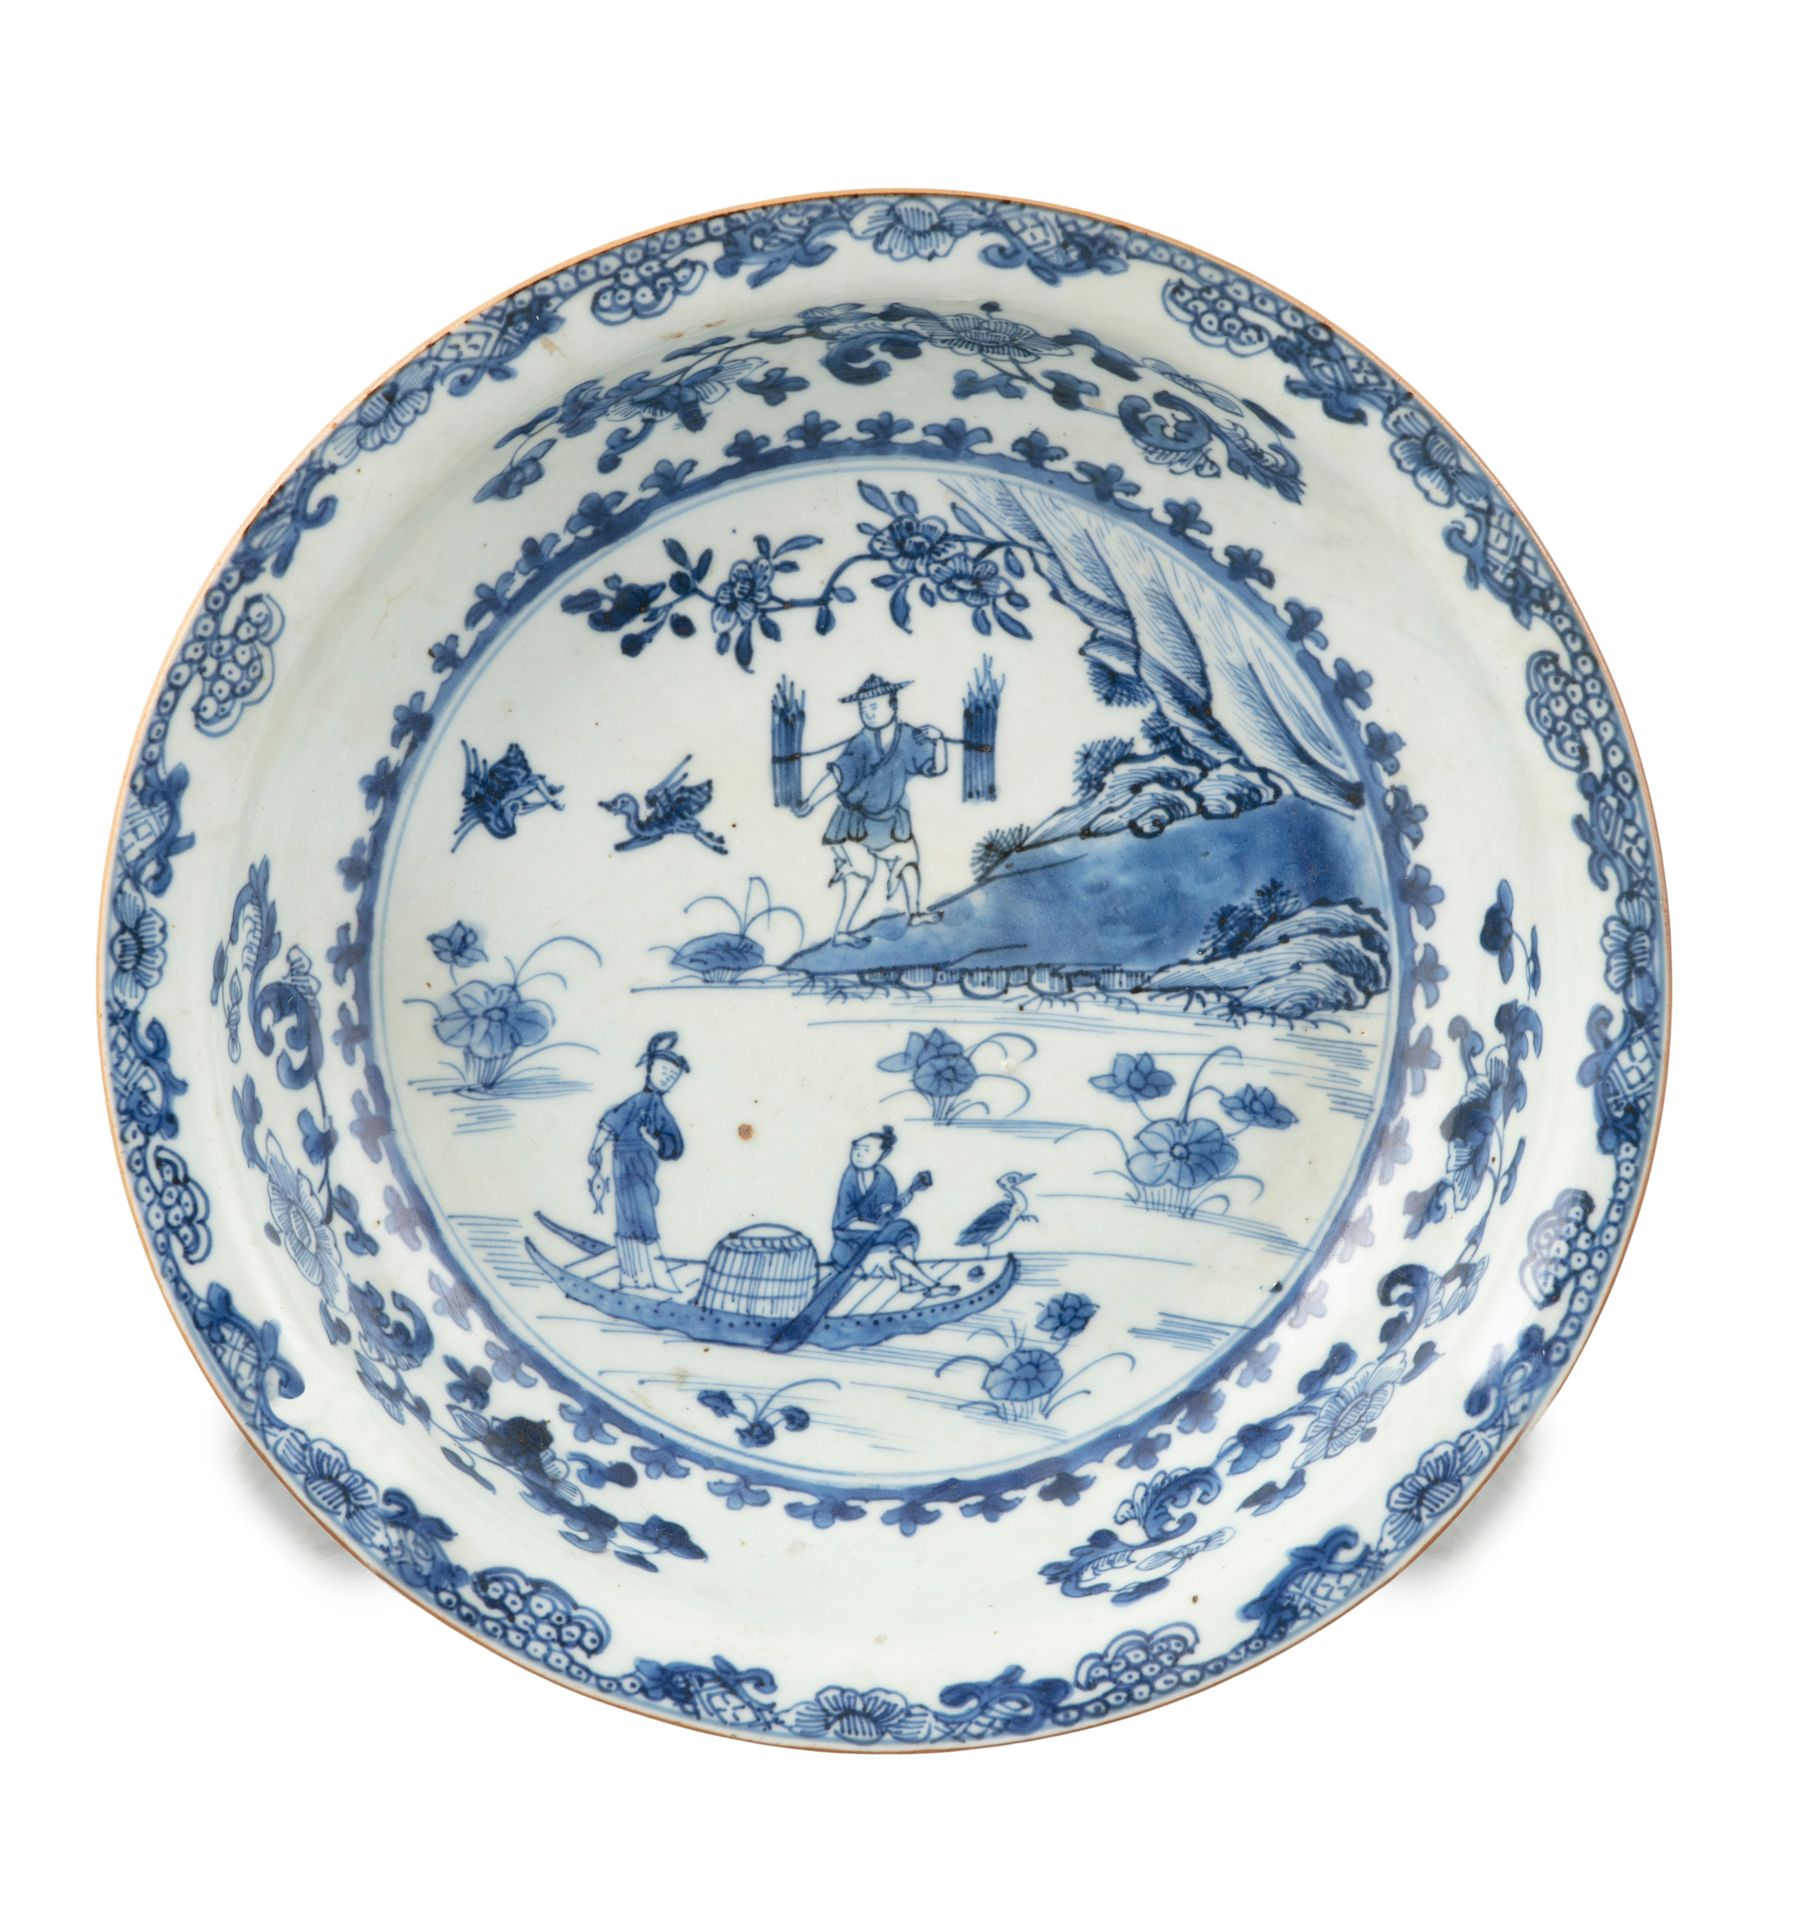 Null 中国出口蓝白相间的 "渔夫和渔船 "瓷碗 中国面向欧洲，清朝 还用钴蓝装饰了荷花，农民和一对飞翔的仙鹤。 高：6,7厘米 - 长：26,5厘米